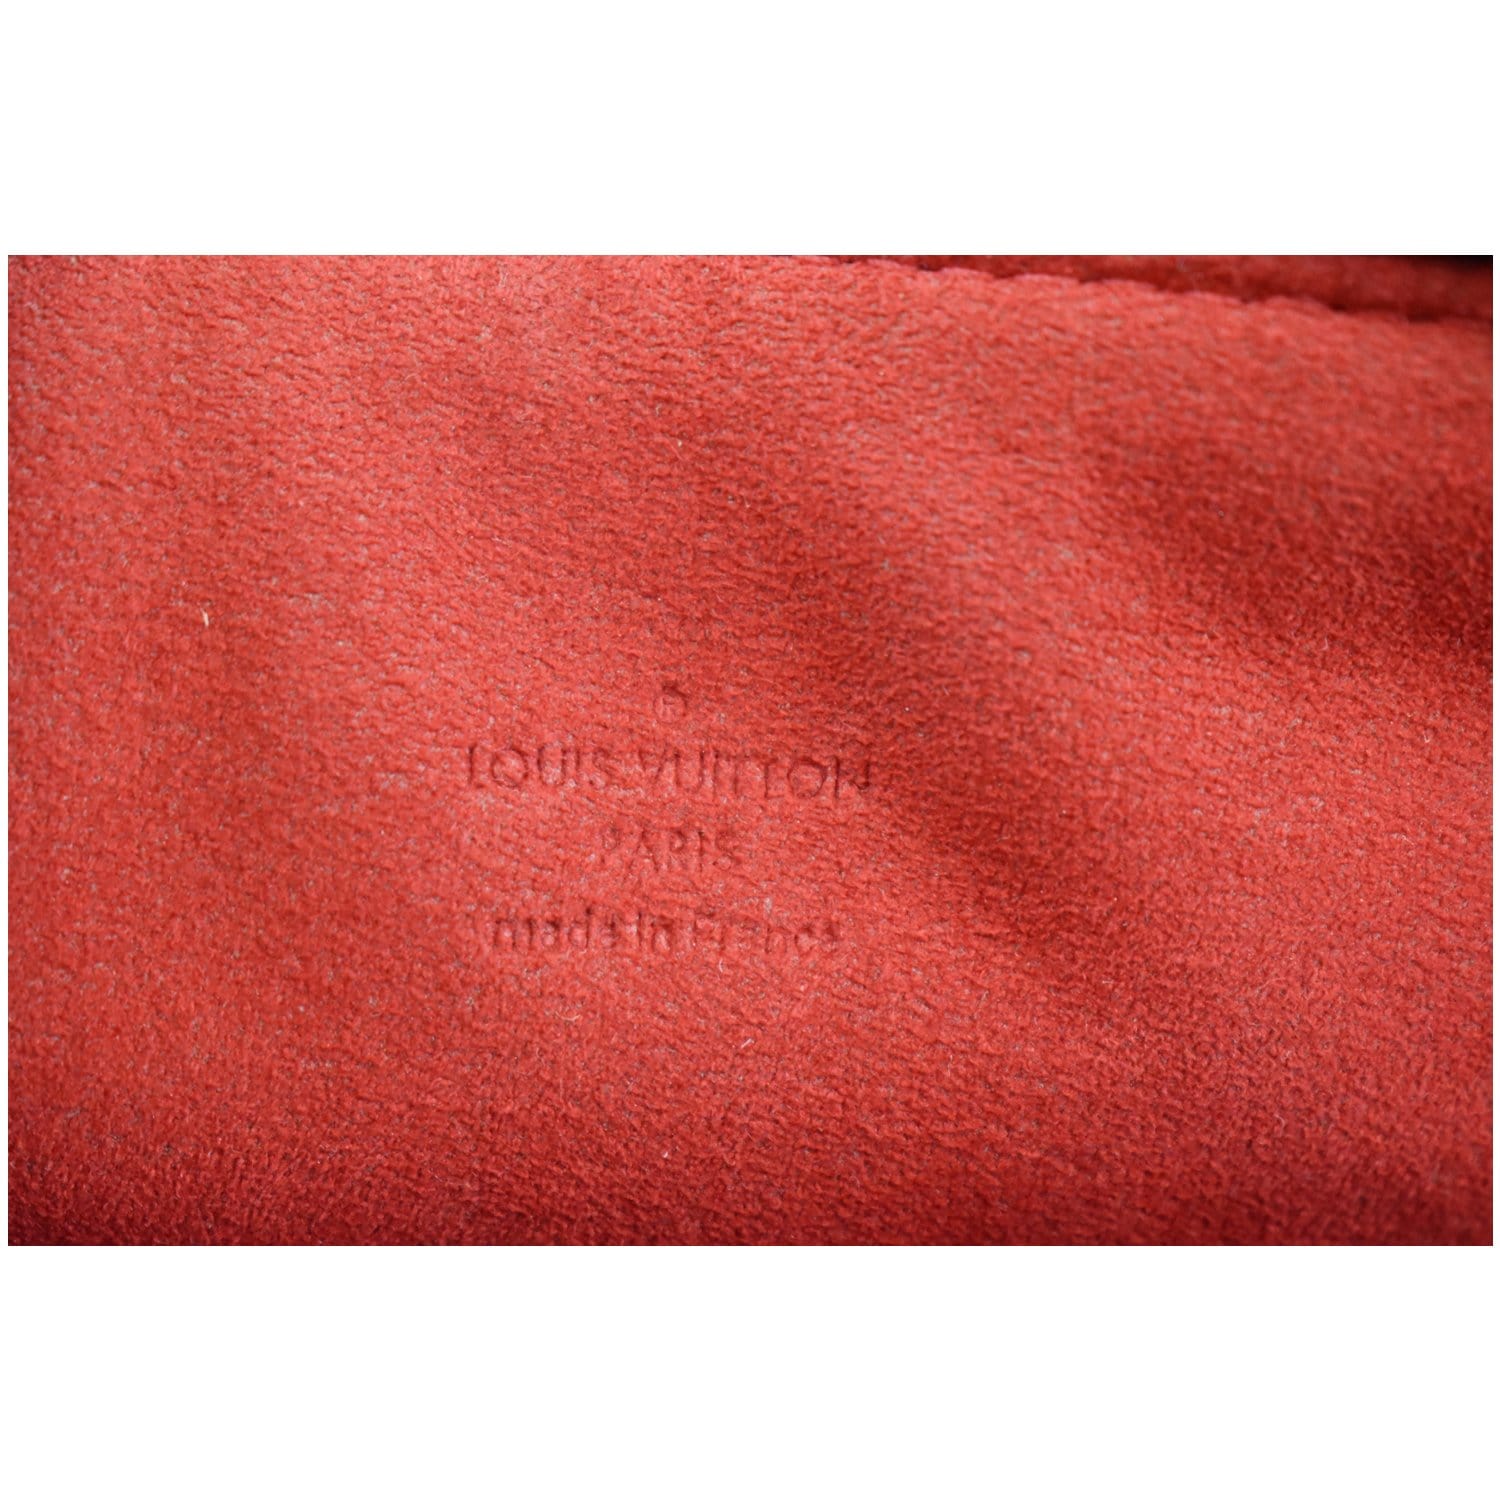 Berkeley leather handbag Louis Vuitton Brown in Leather - 37445615